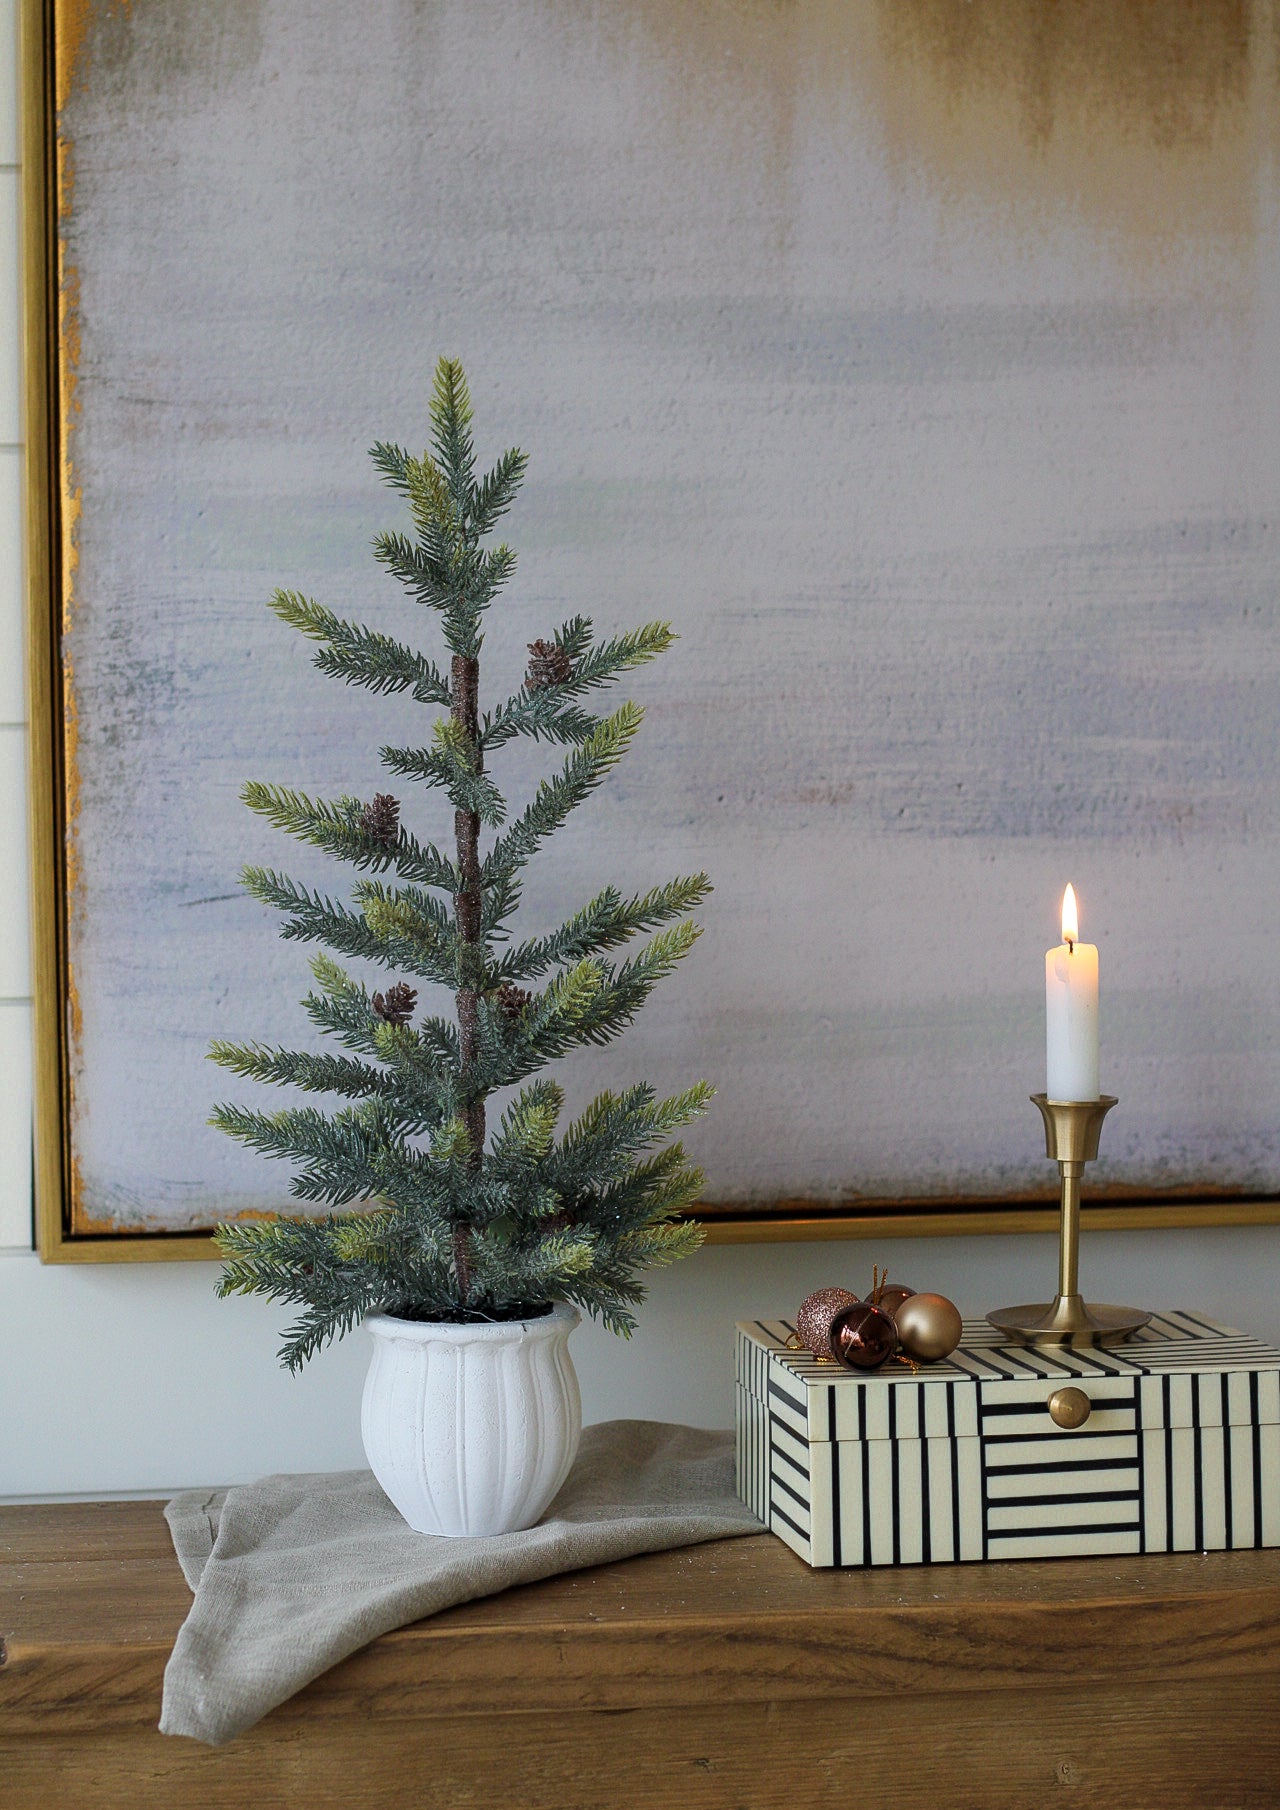 Glitter Pine Tree in White Pot